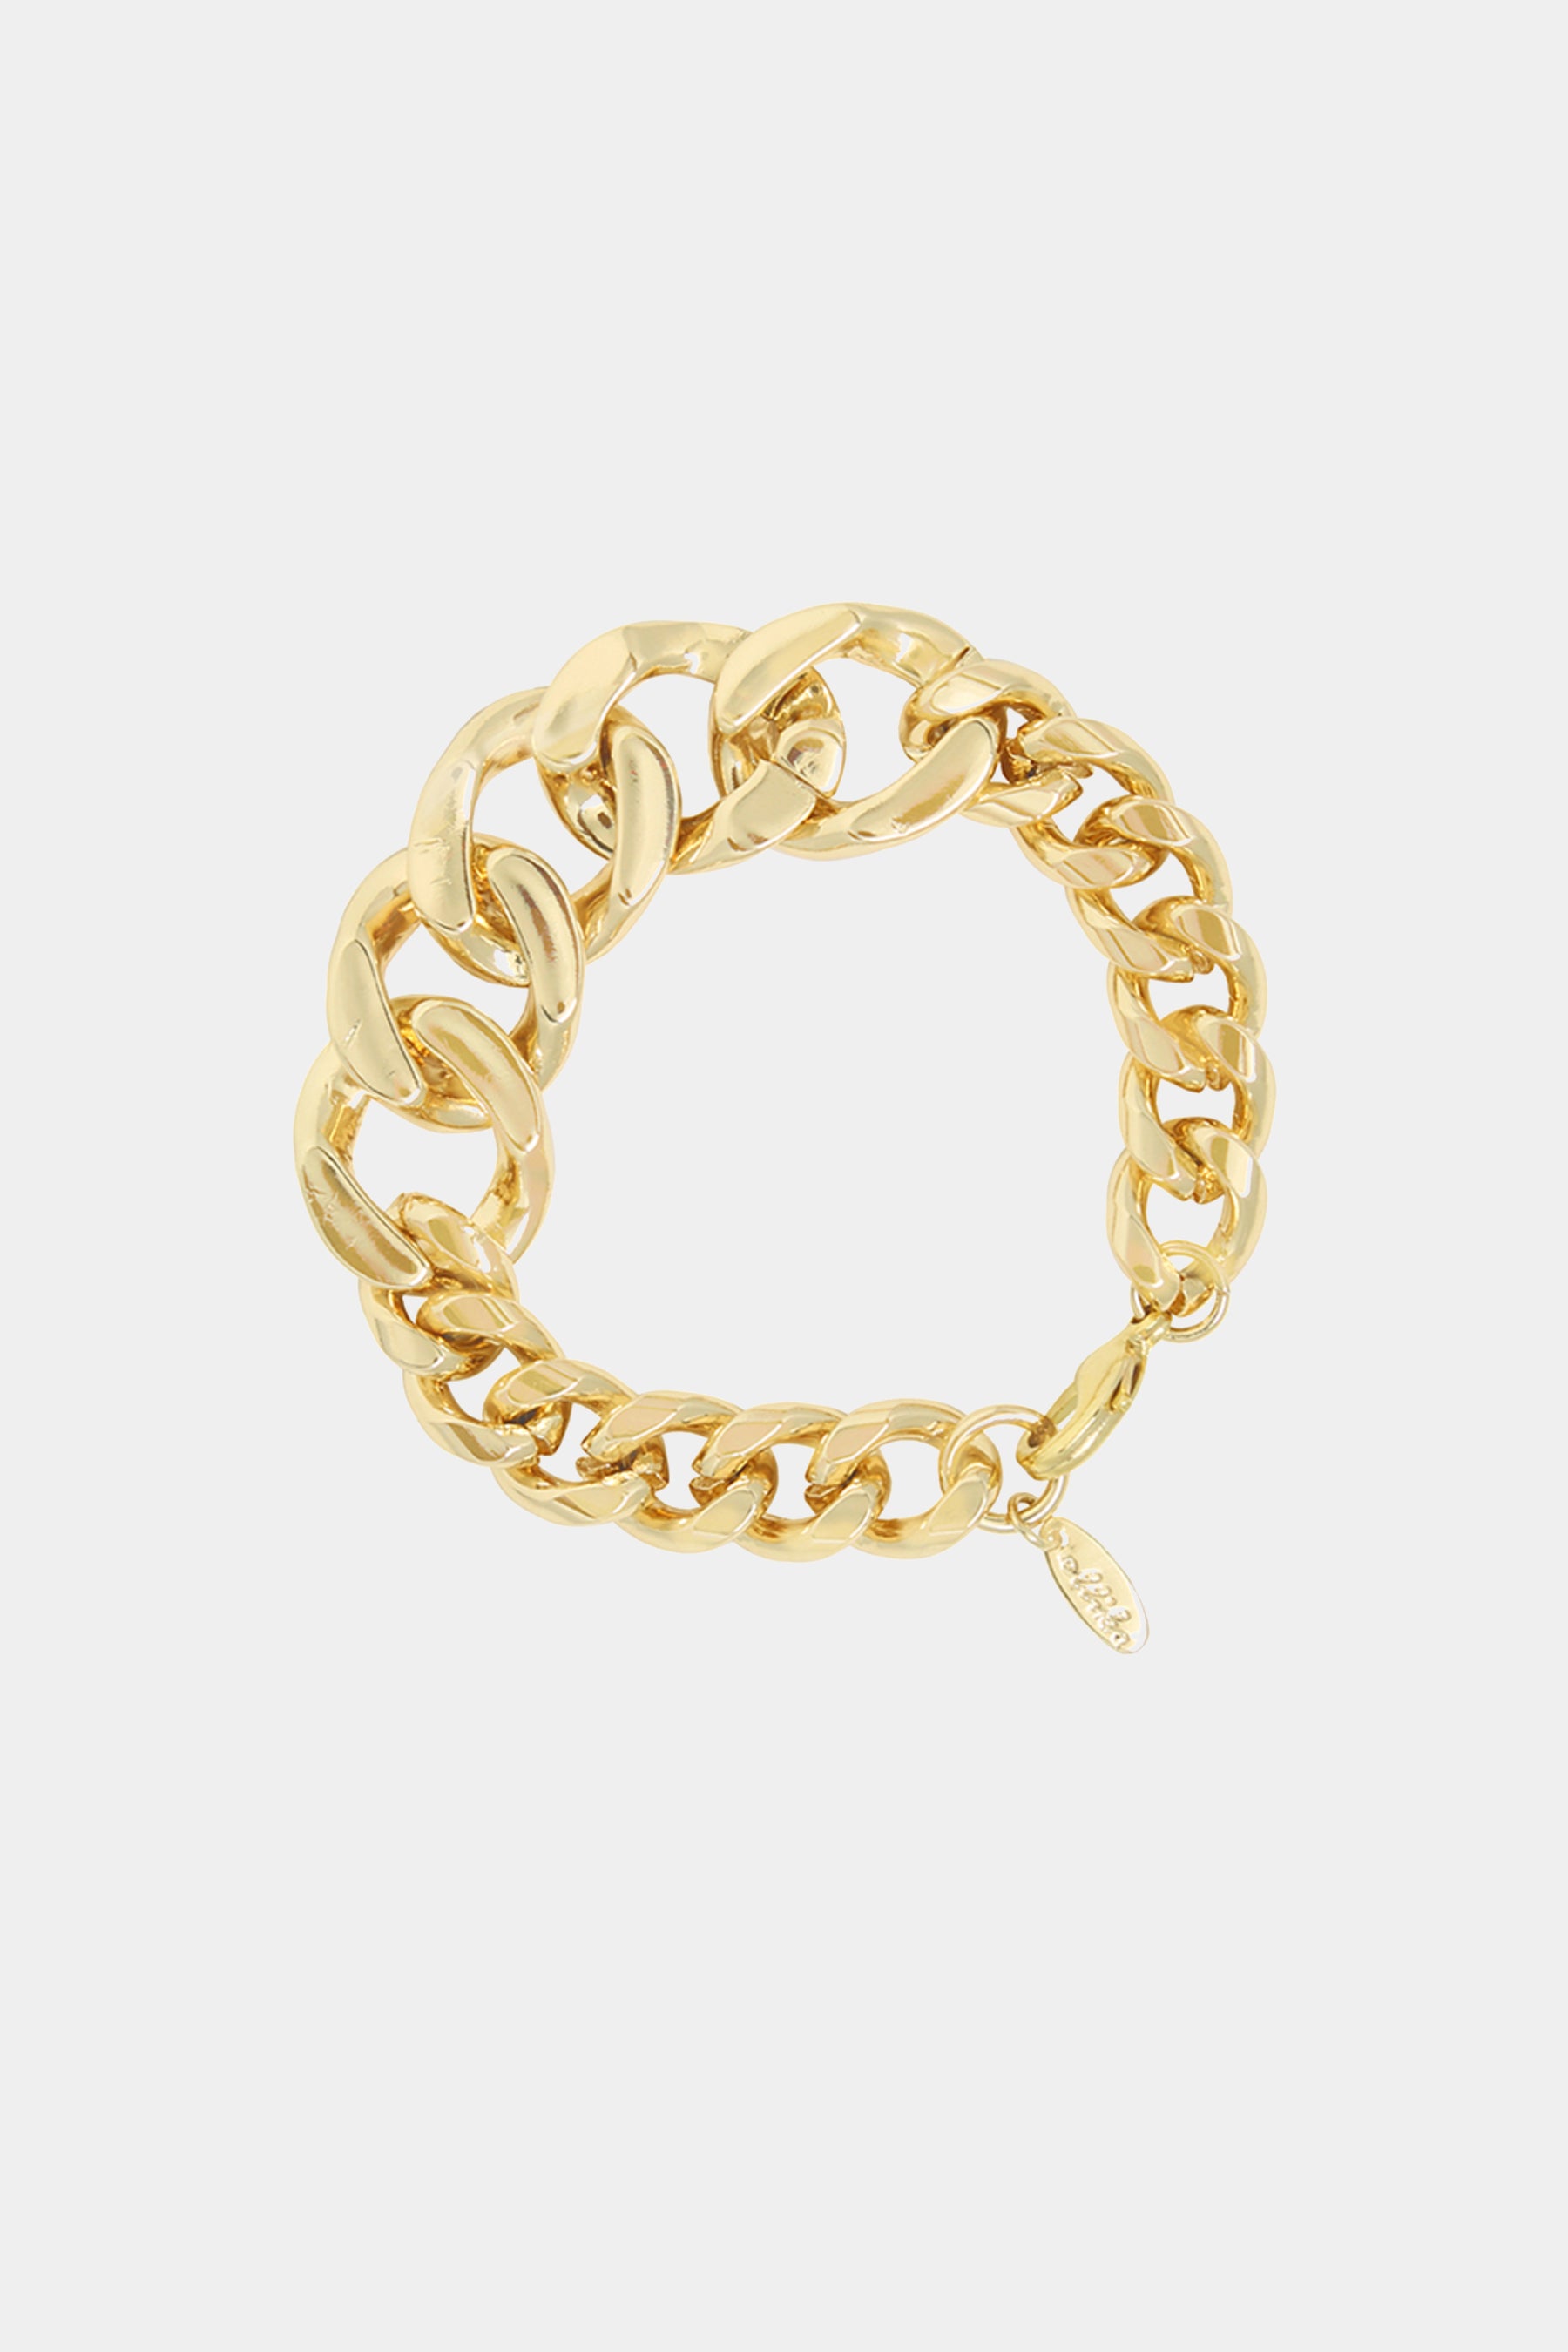 Big elastic gold silver chain bracelet